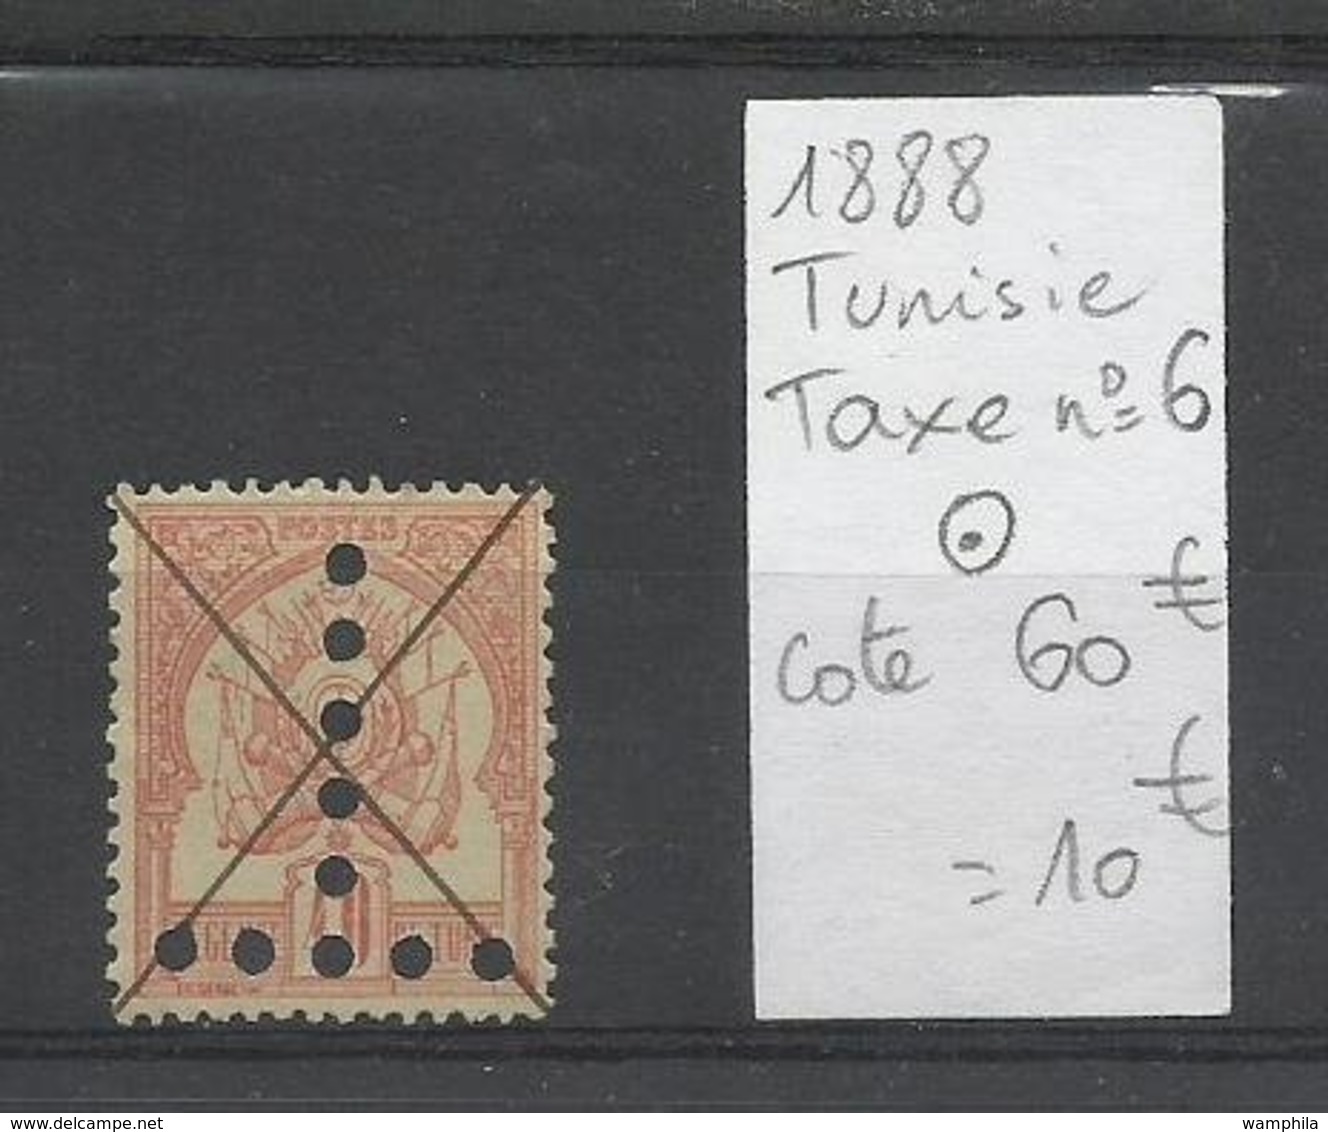 1888 Tunisie, Taxe N° 6 Oblitéré, Cote 60€ - Portomarken